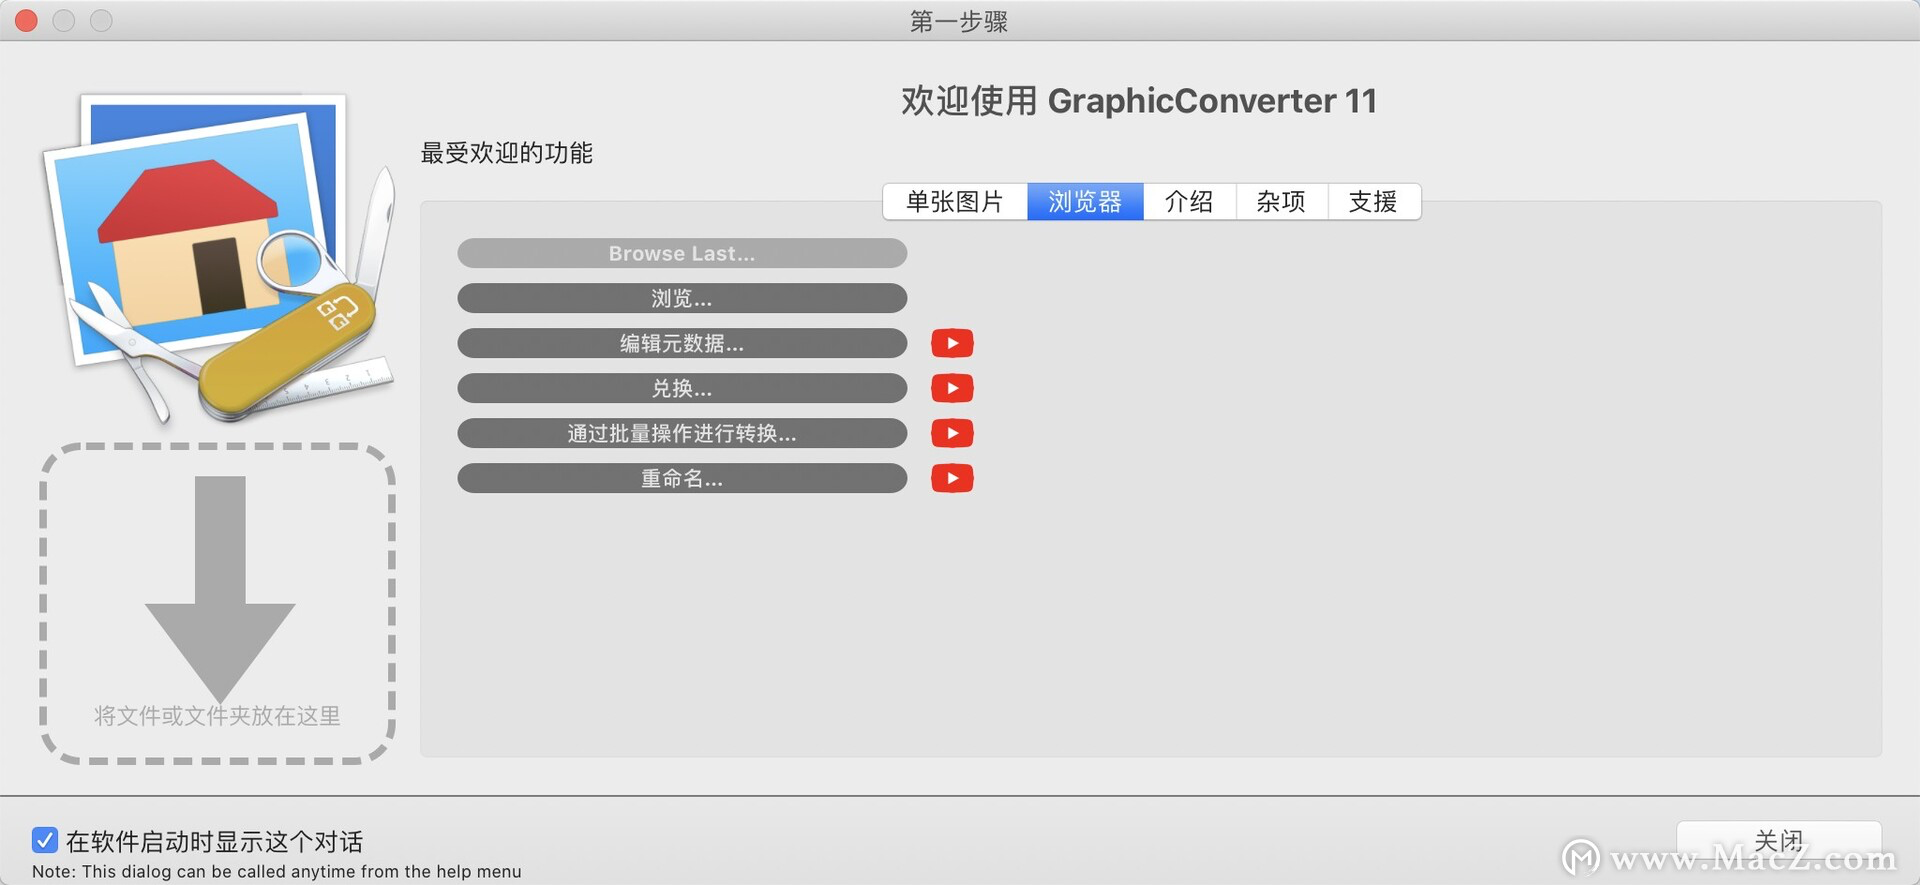 graphicconverter 11 mac